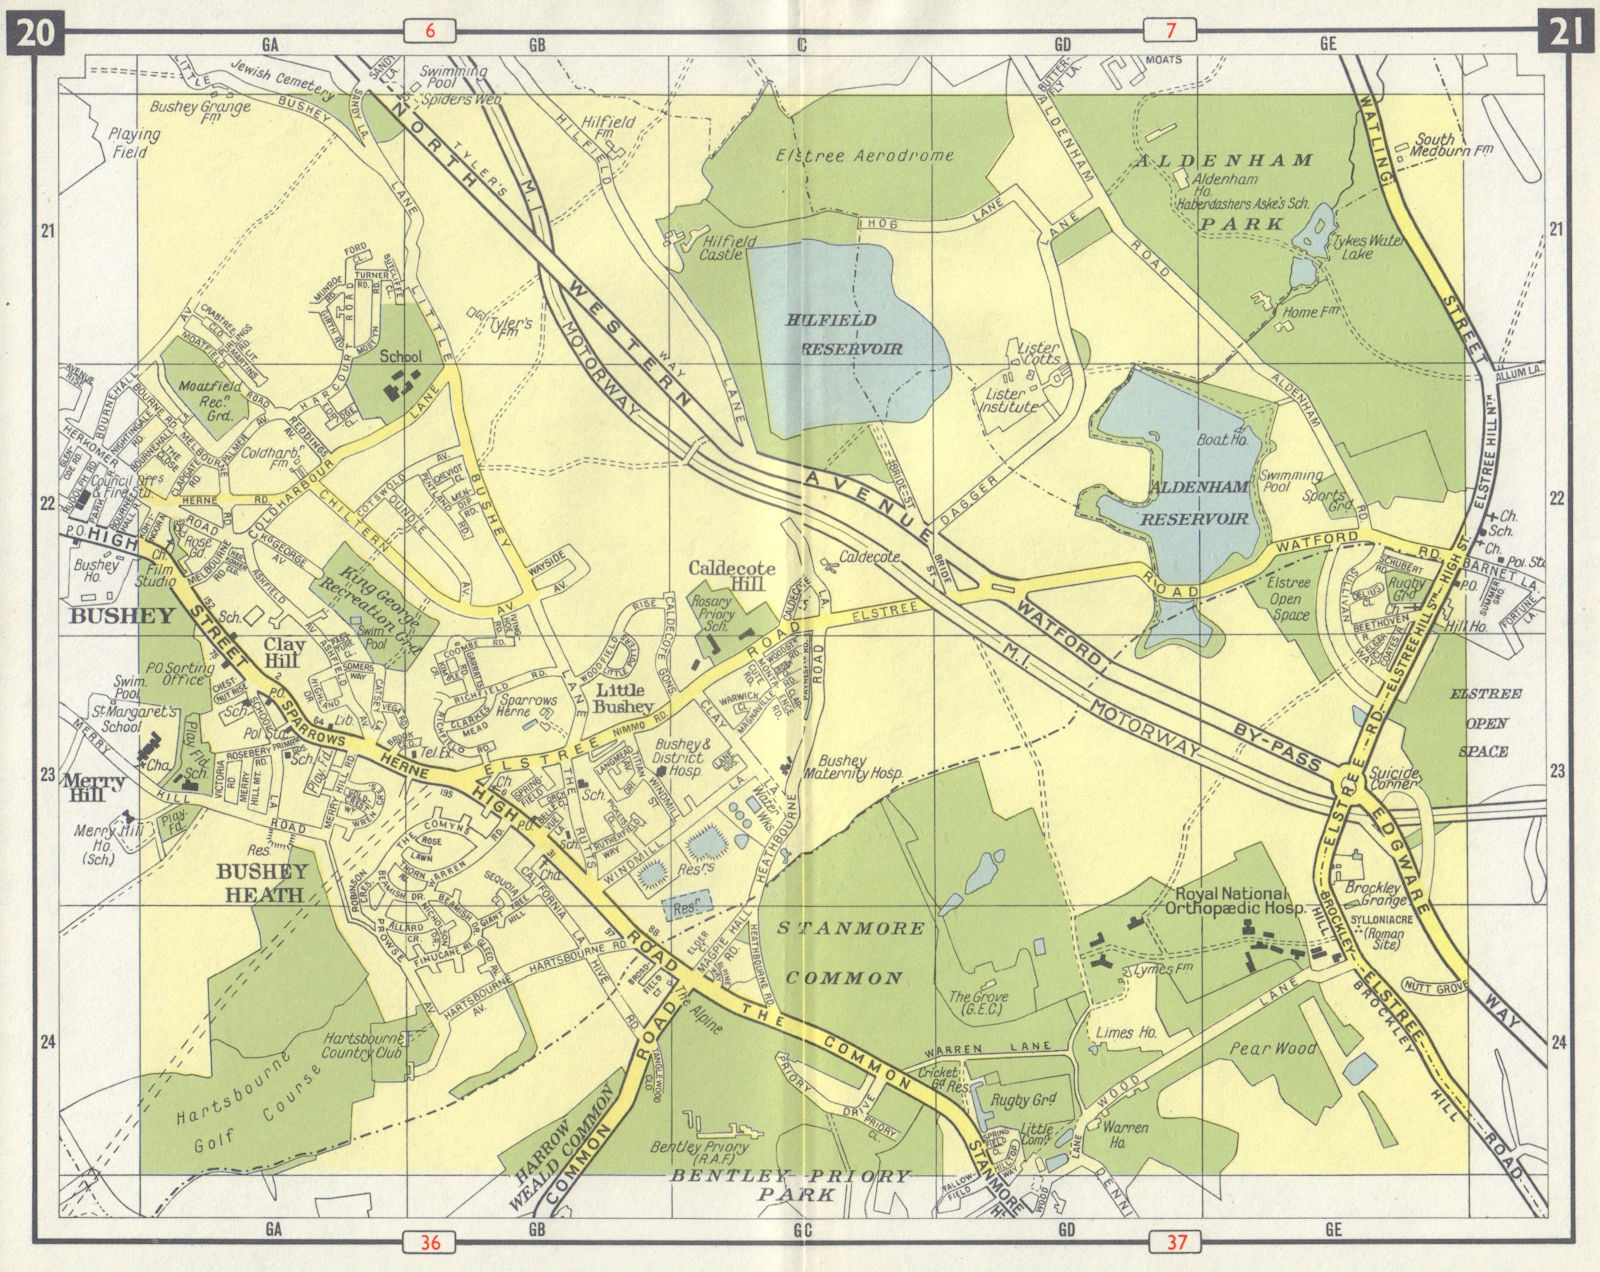 NW LONDON Bushey Heath Elstree Stanmore Aldenham Park Caldecote M1 open 1965 map